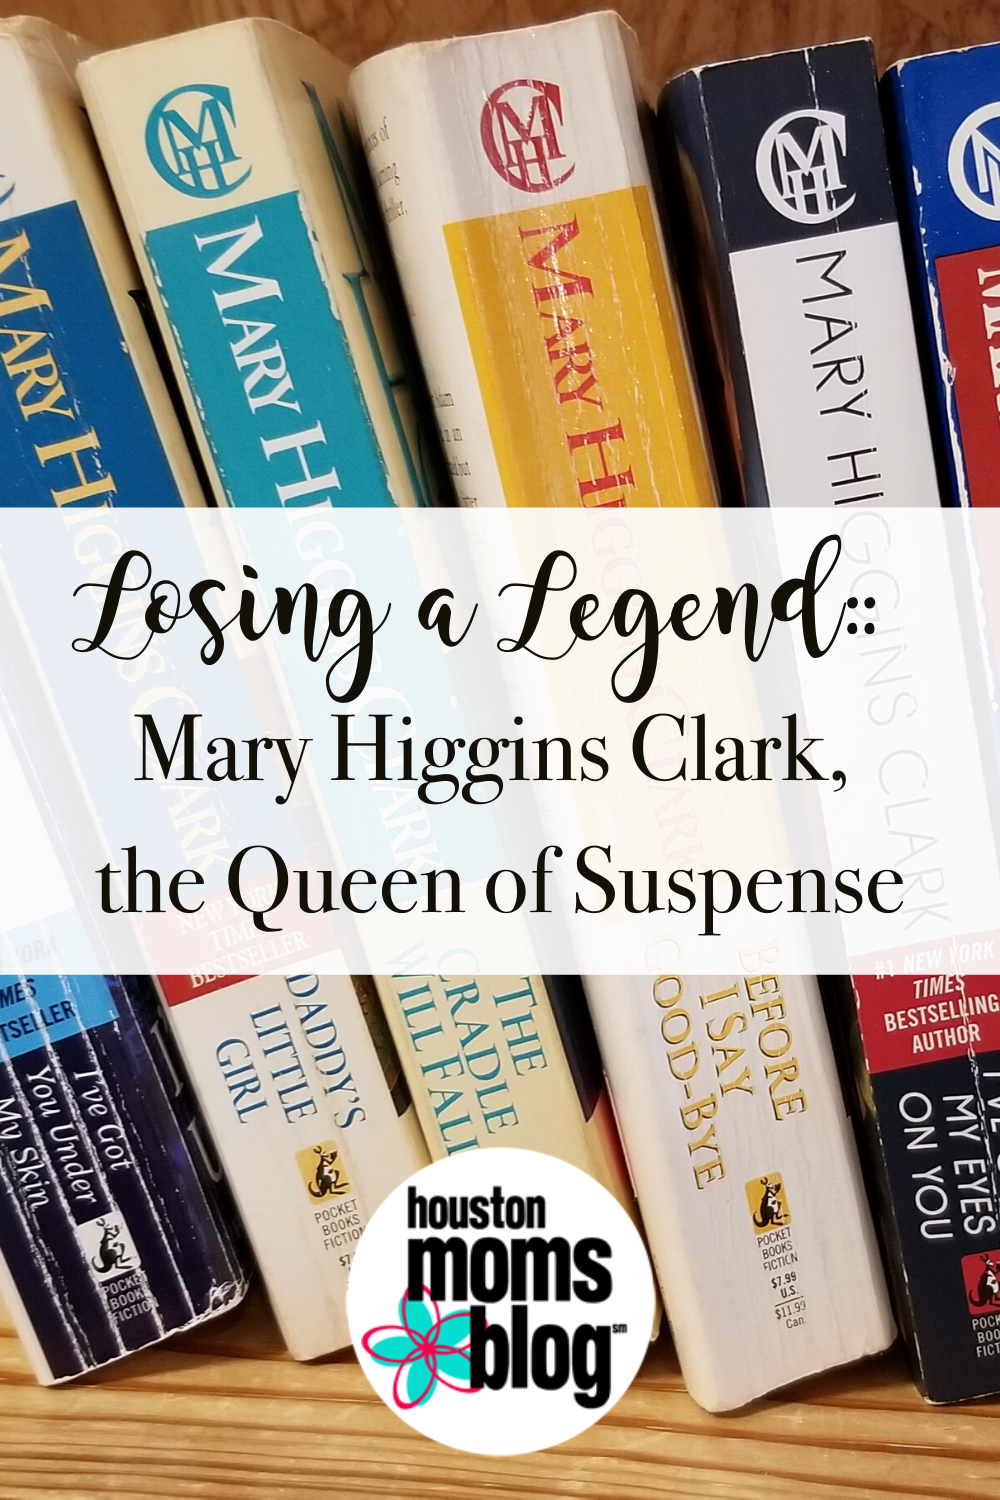 Houston Moms Blog "Losing a Legend:: Mary Higgins Clark, the Queen of Suspense" #houstonmomsblog #momsaroundhouston